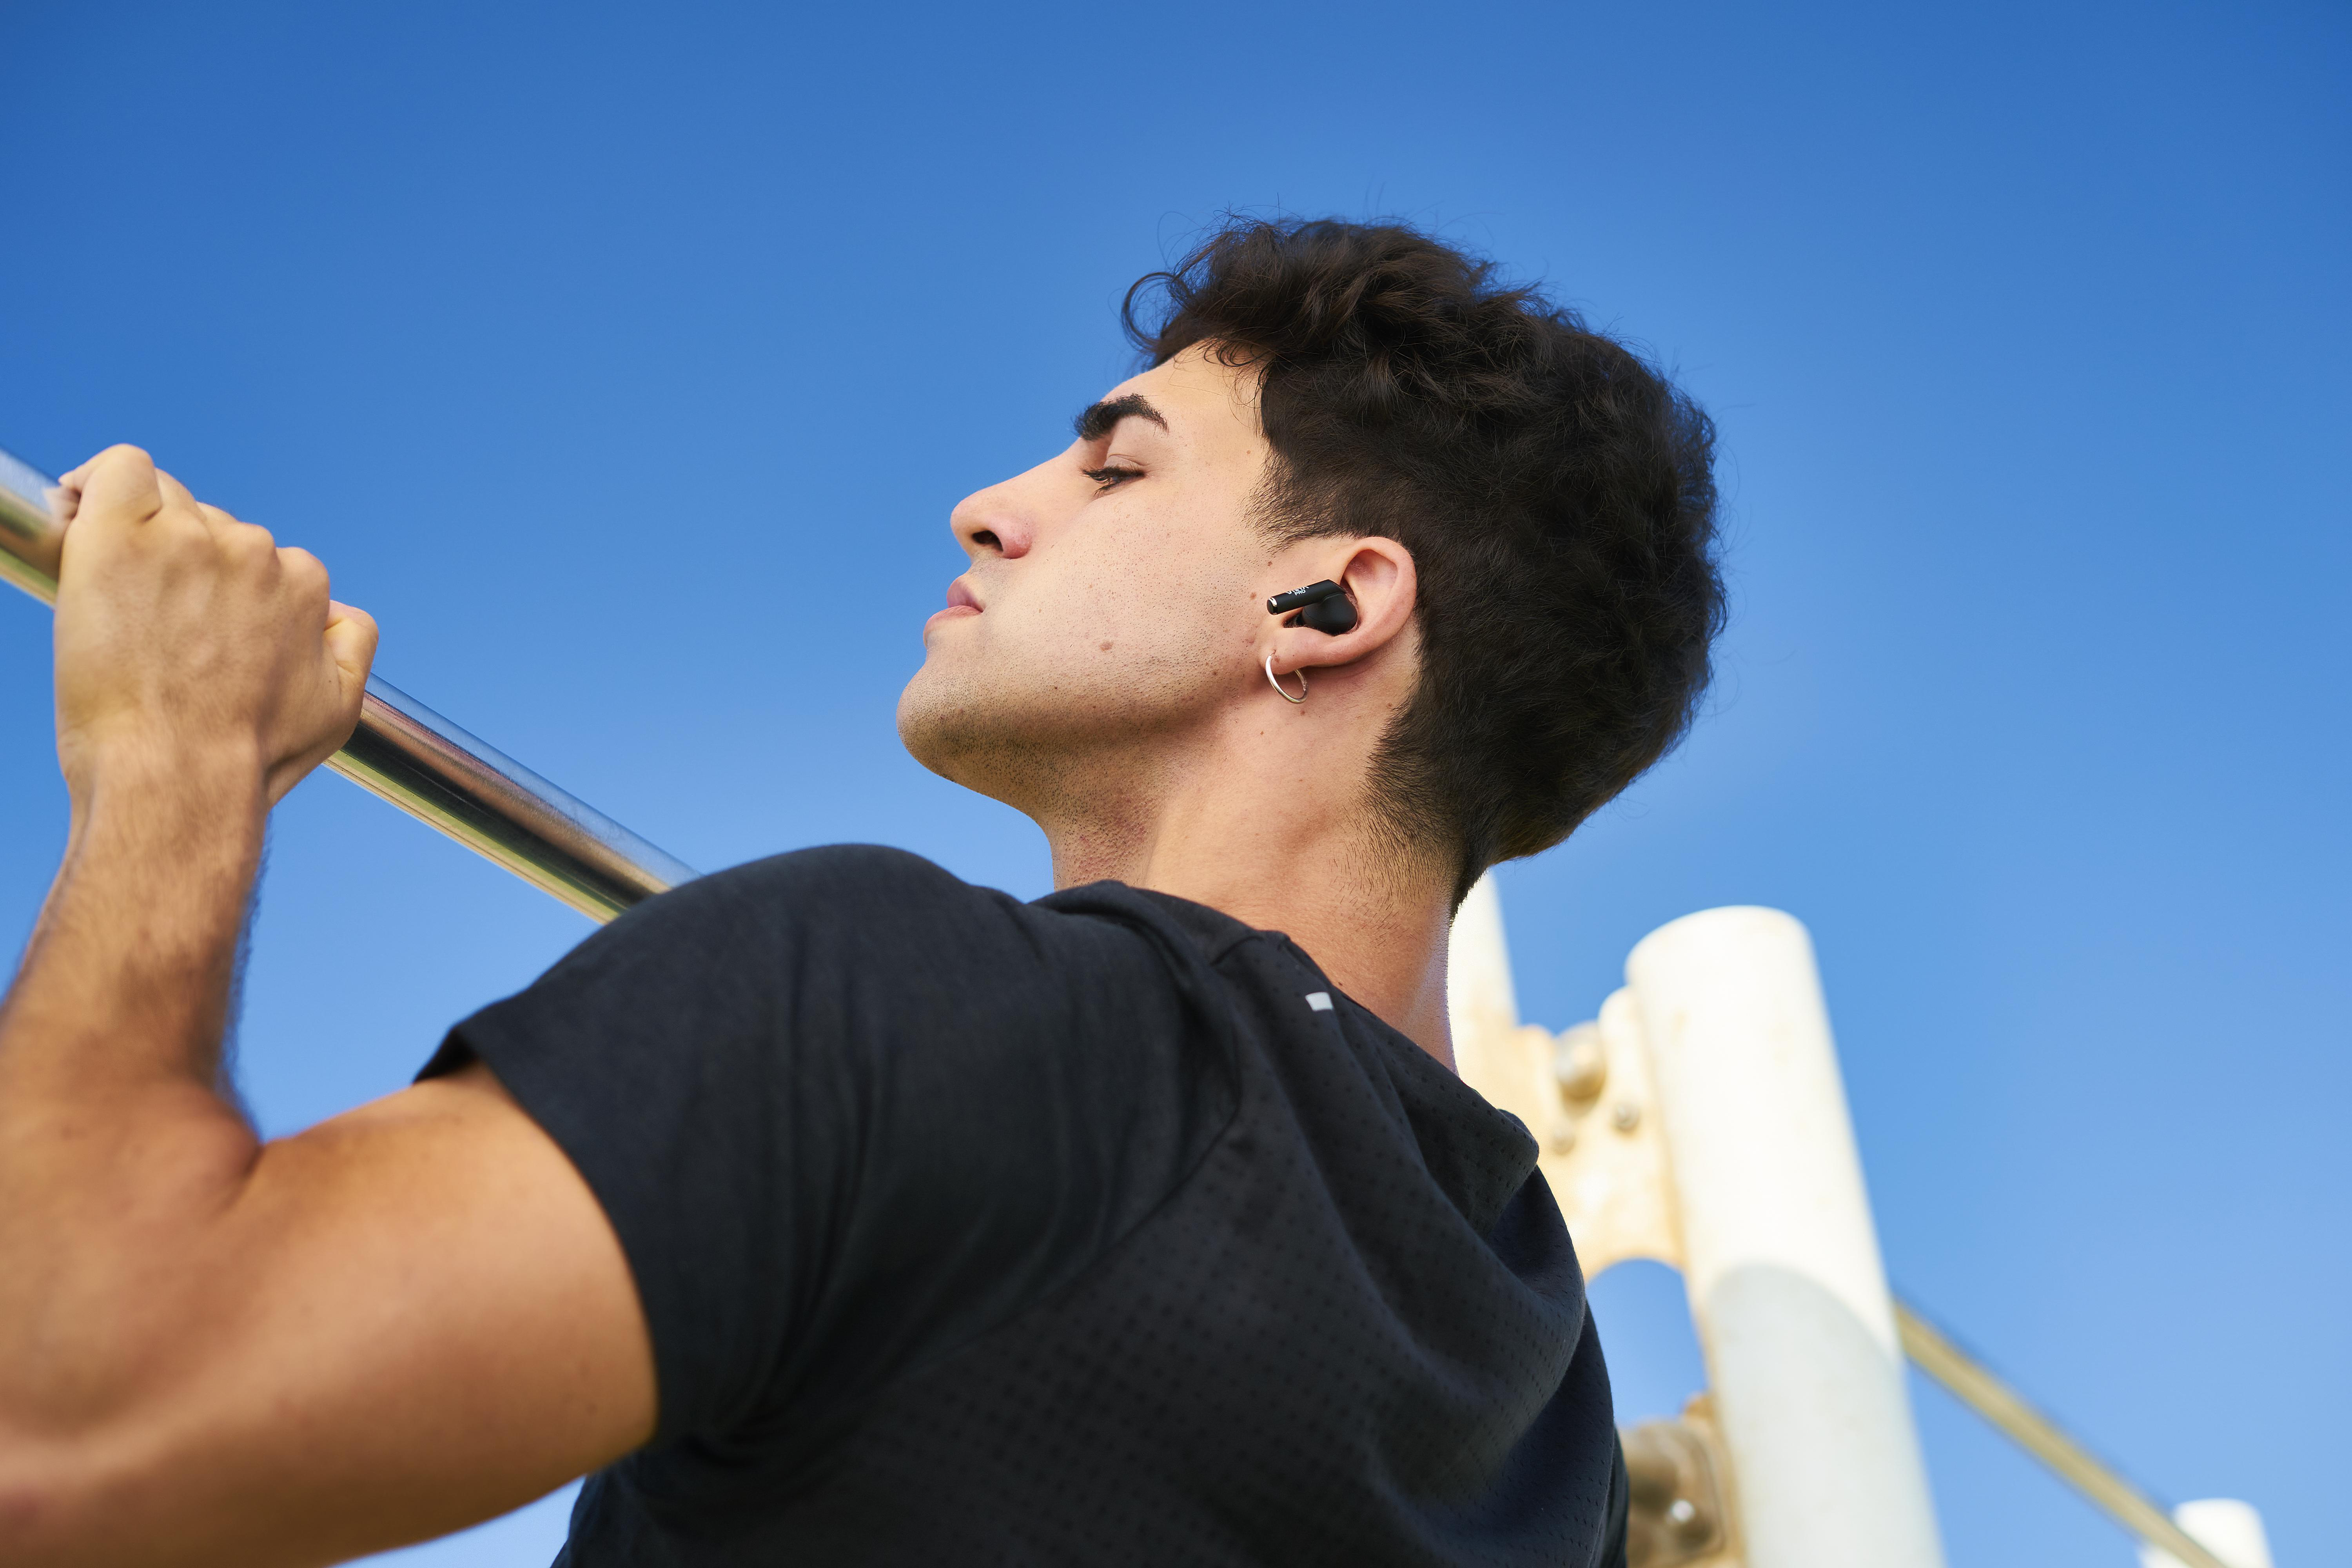 Wireless, Bluetooth Schwarz Fade VIETA True Kopfhörer In-ear Anc